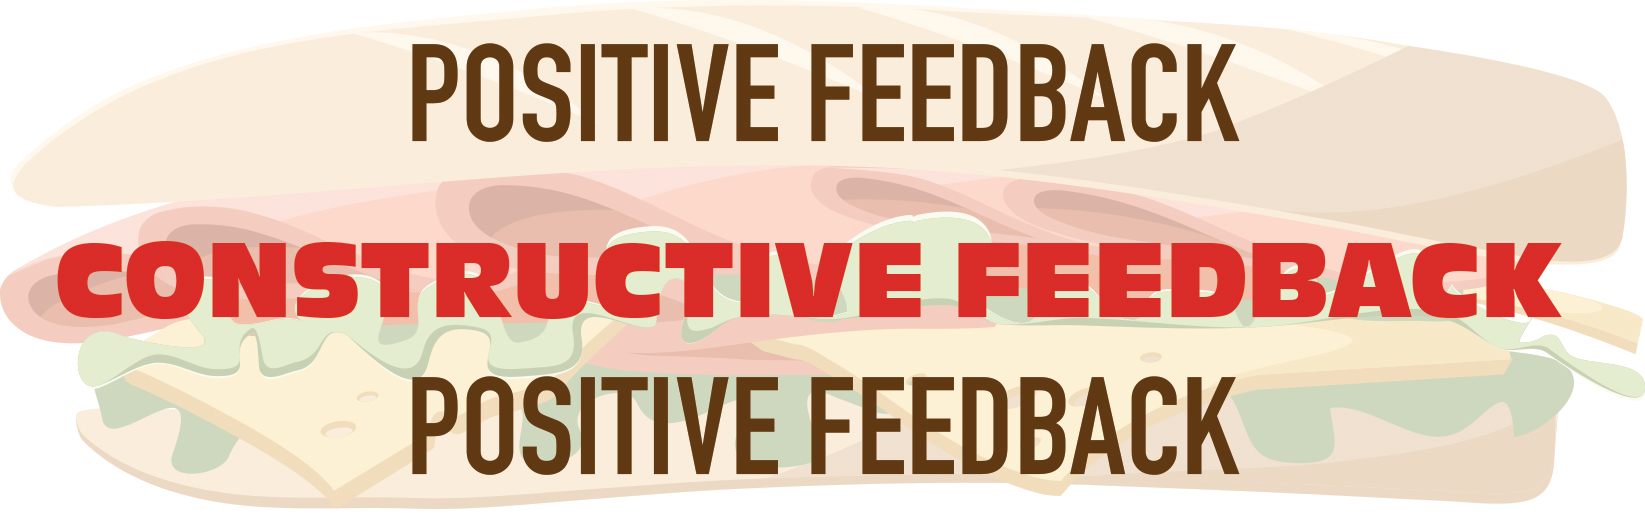 positive feedback, constructive feedback, positive feedback